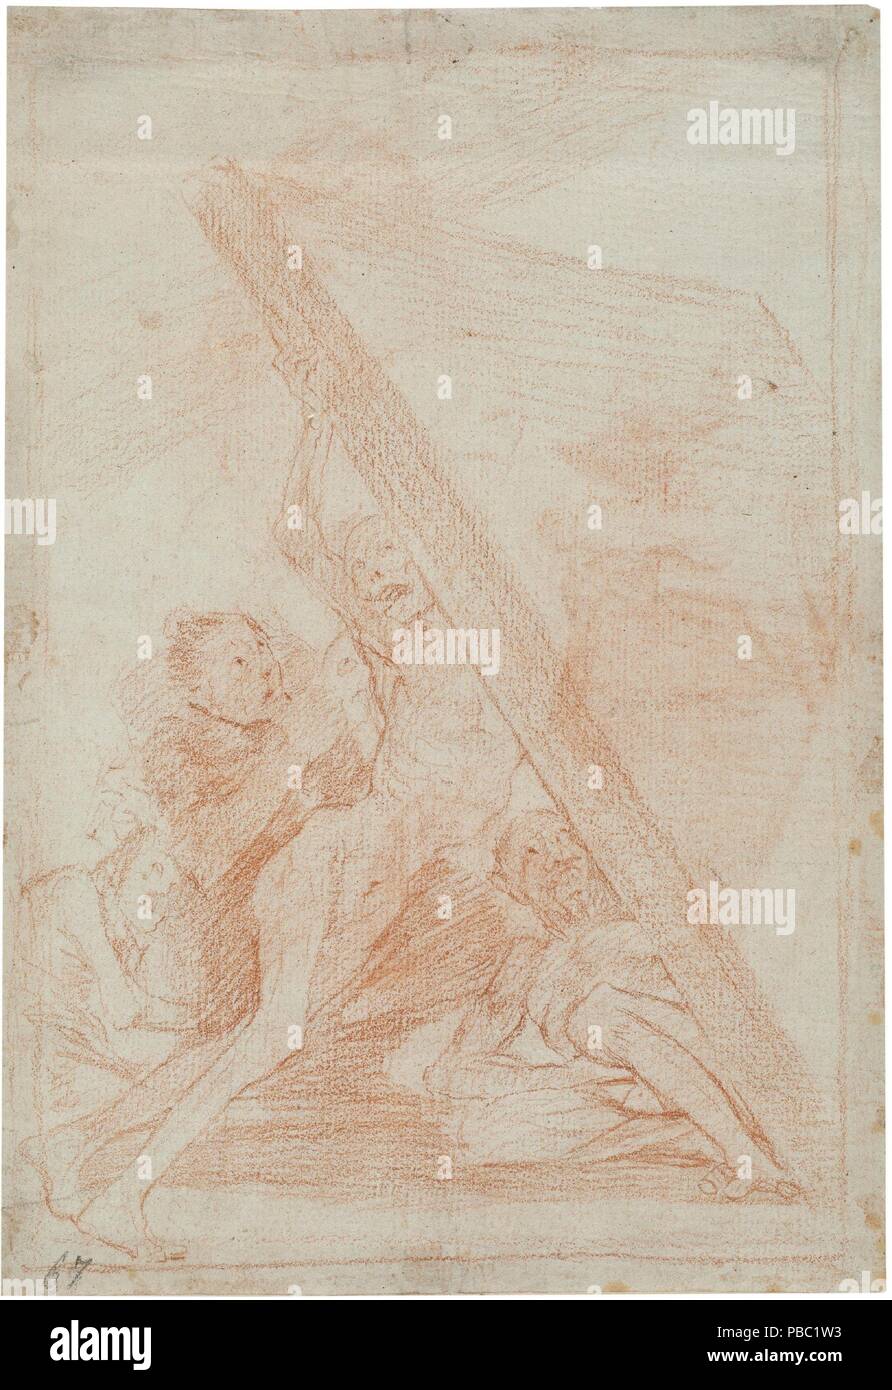 Francisco de Goya y Lucientes/' und noch nicht gehen! (Capricho 59)". 1797 - 1798. Rote Kreide auf dunklem Gelb Bütten. Museum: Museo del Prado, Madrid, España. Stockfoto